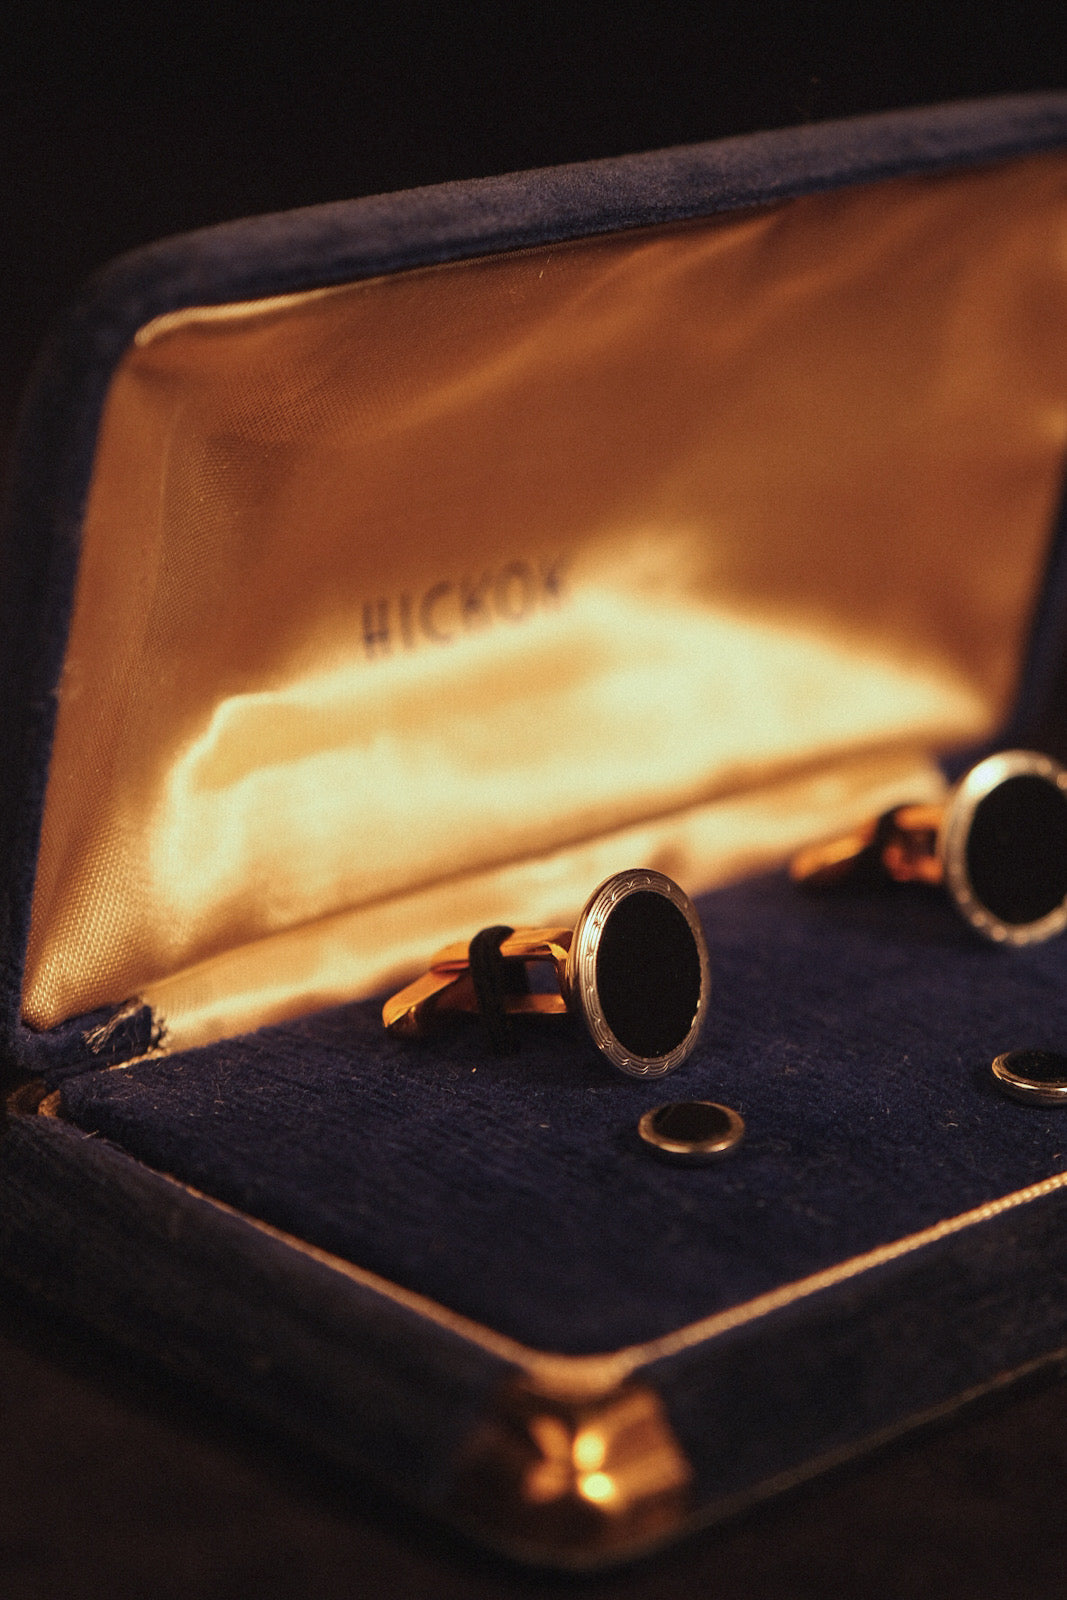 1930s Black Enamel Cufflinks & Stud Set By Hickock